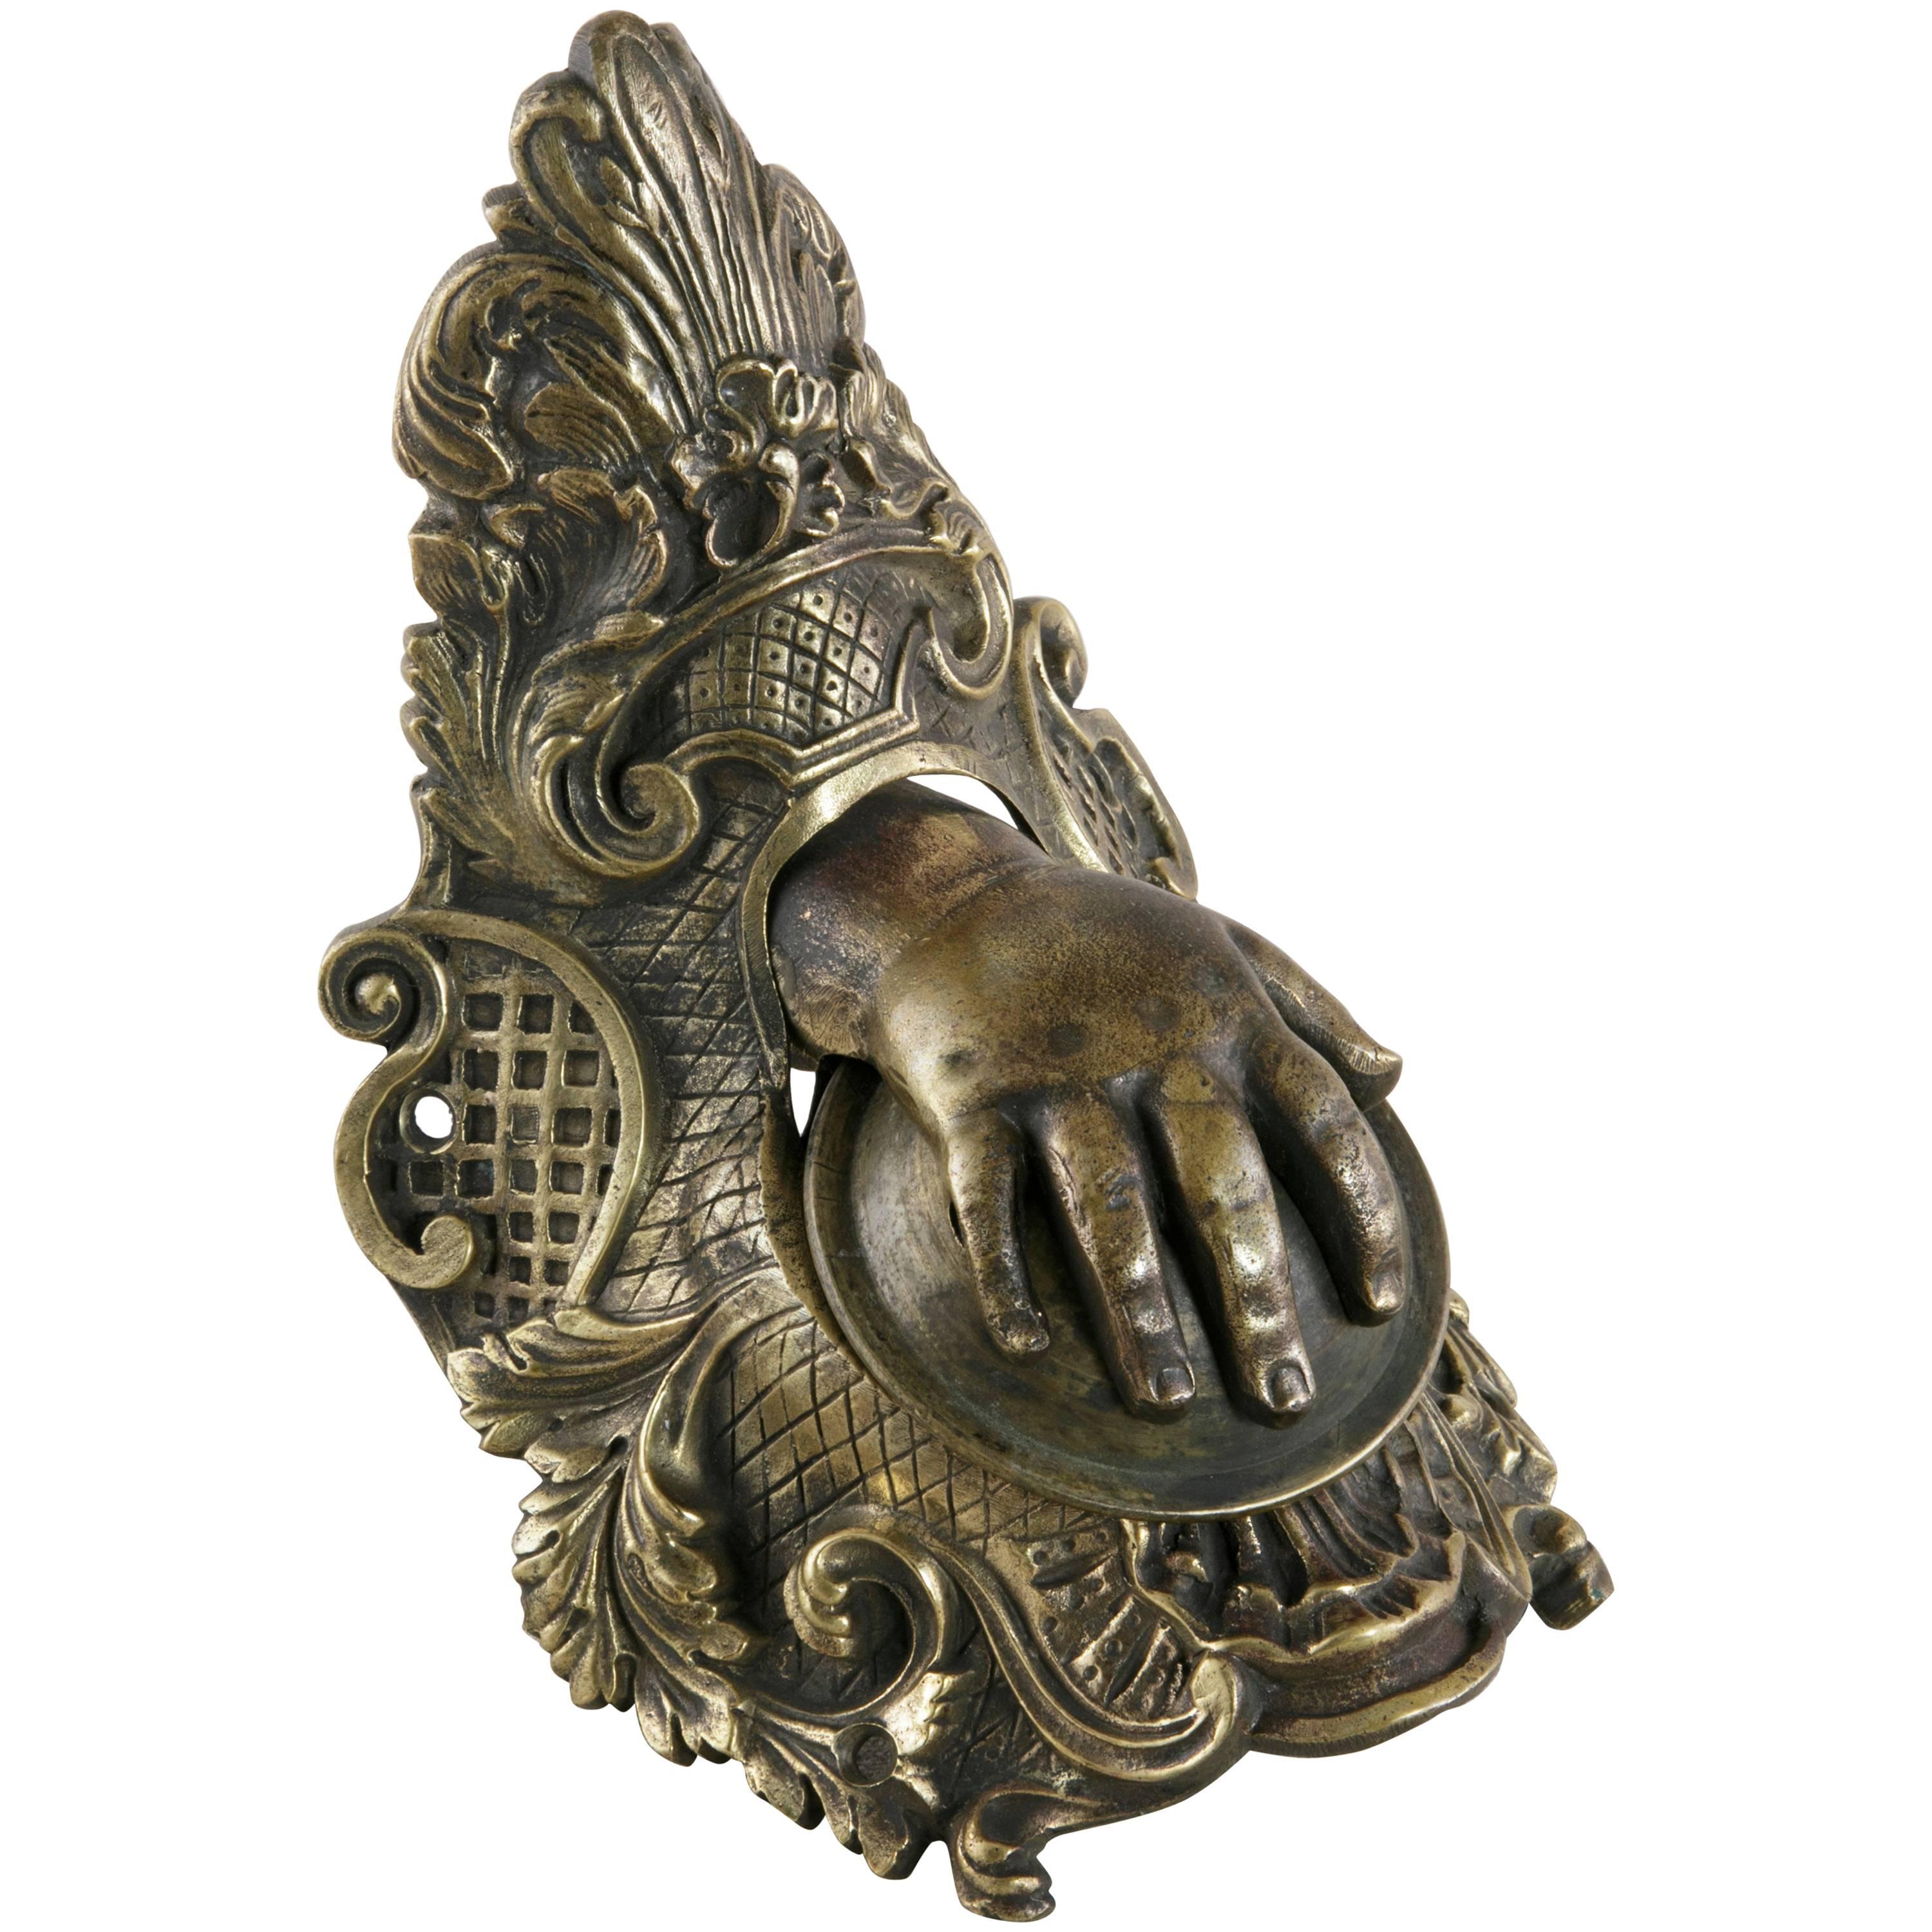 19th Century French Napoleon III Period Bronze Billiard Corner Pocket with Hand